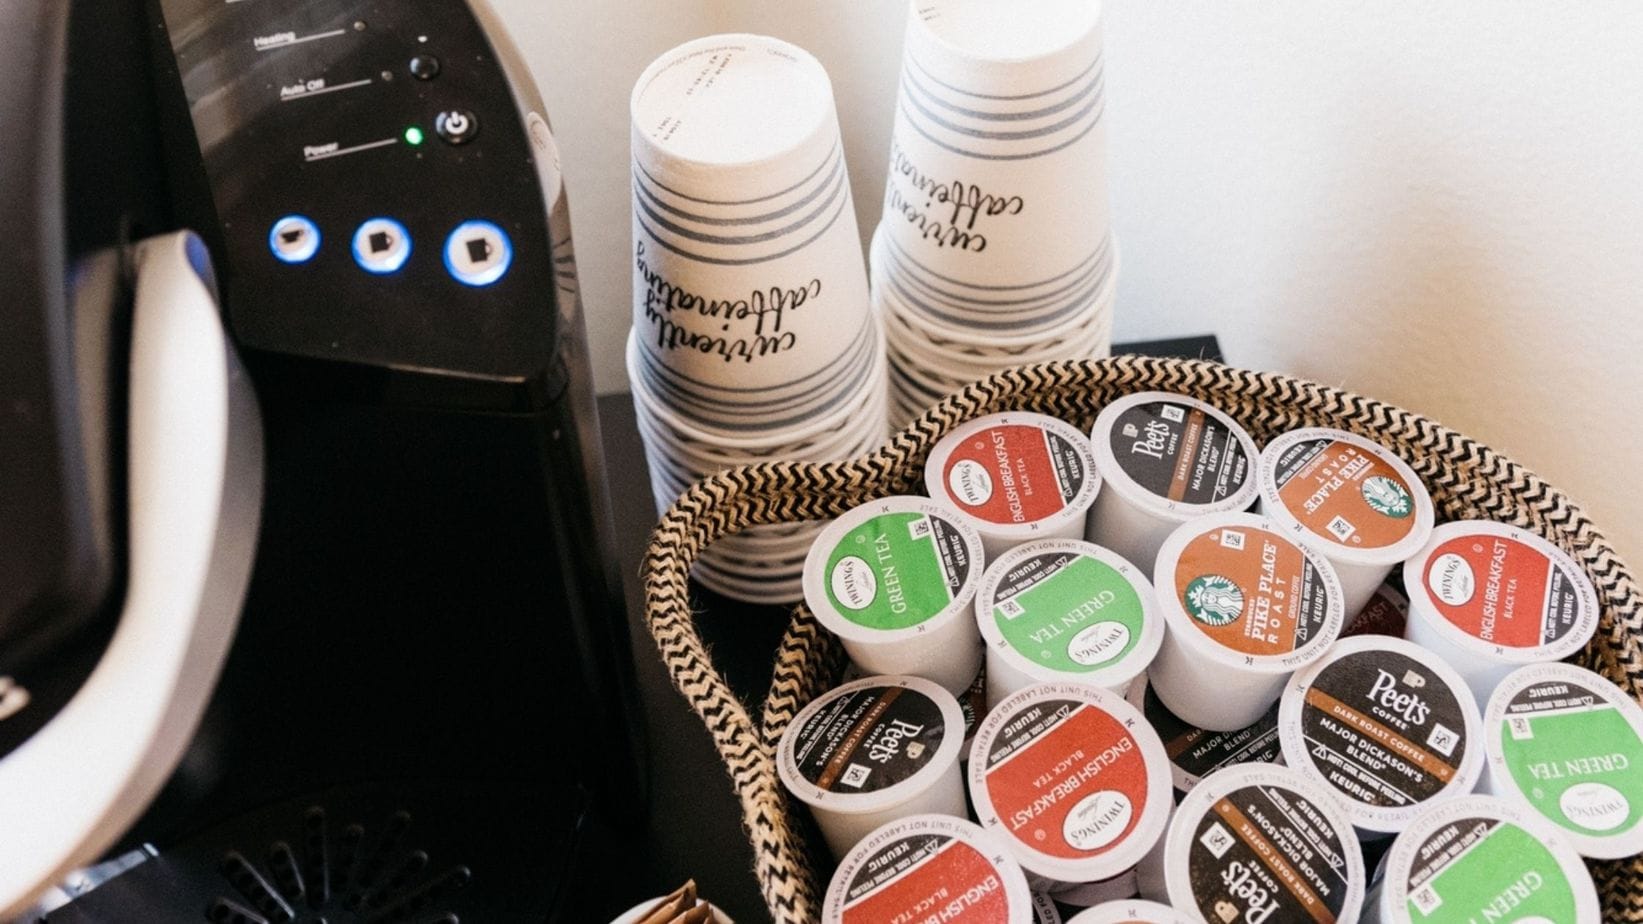 ¿Su K-Cup reutilizable prepara café débil? ¡Arreglemos esto!